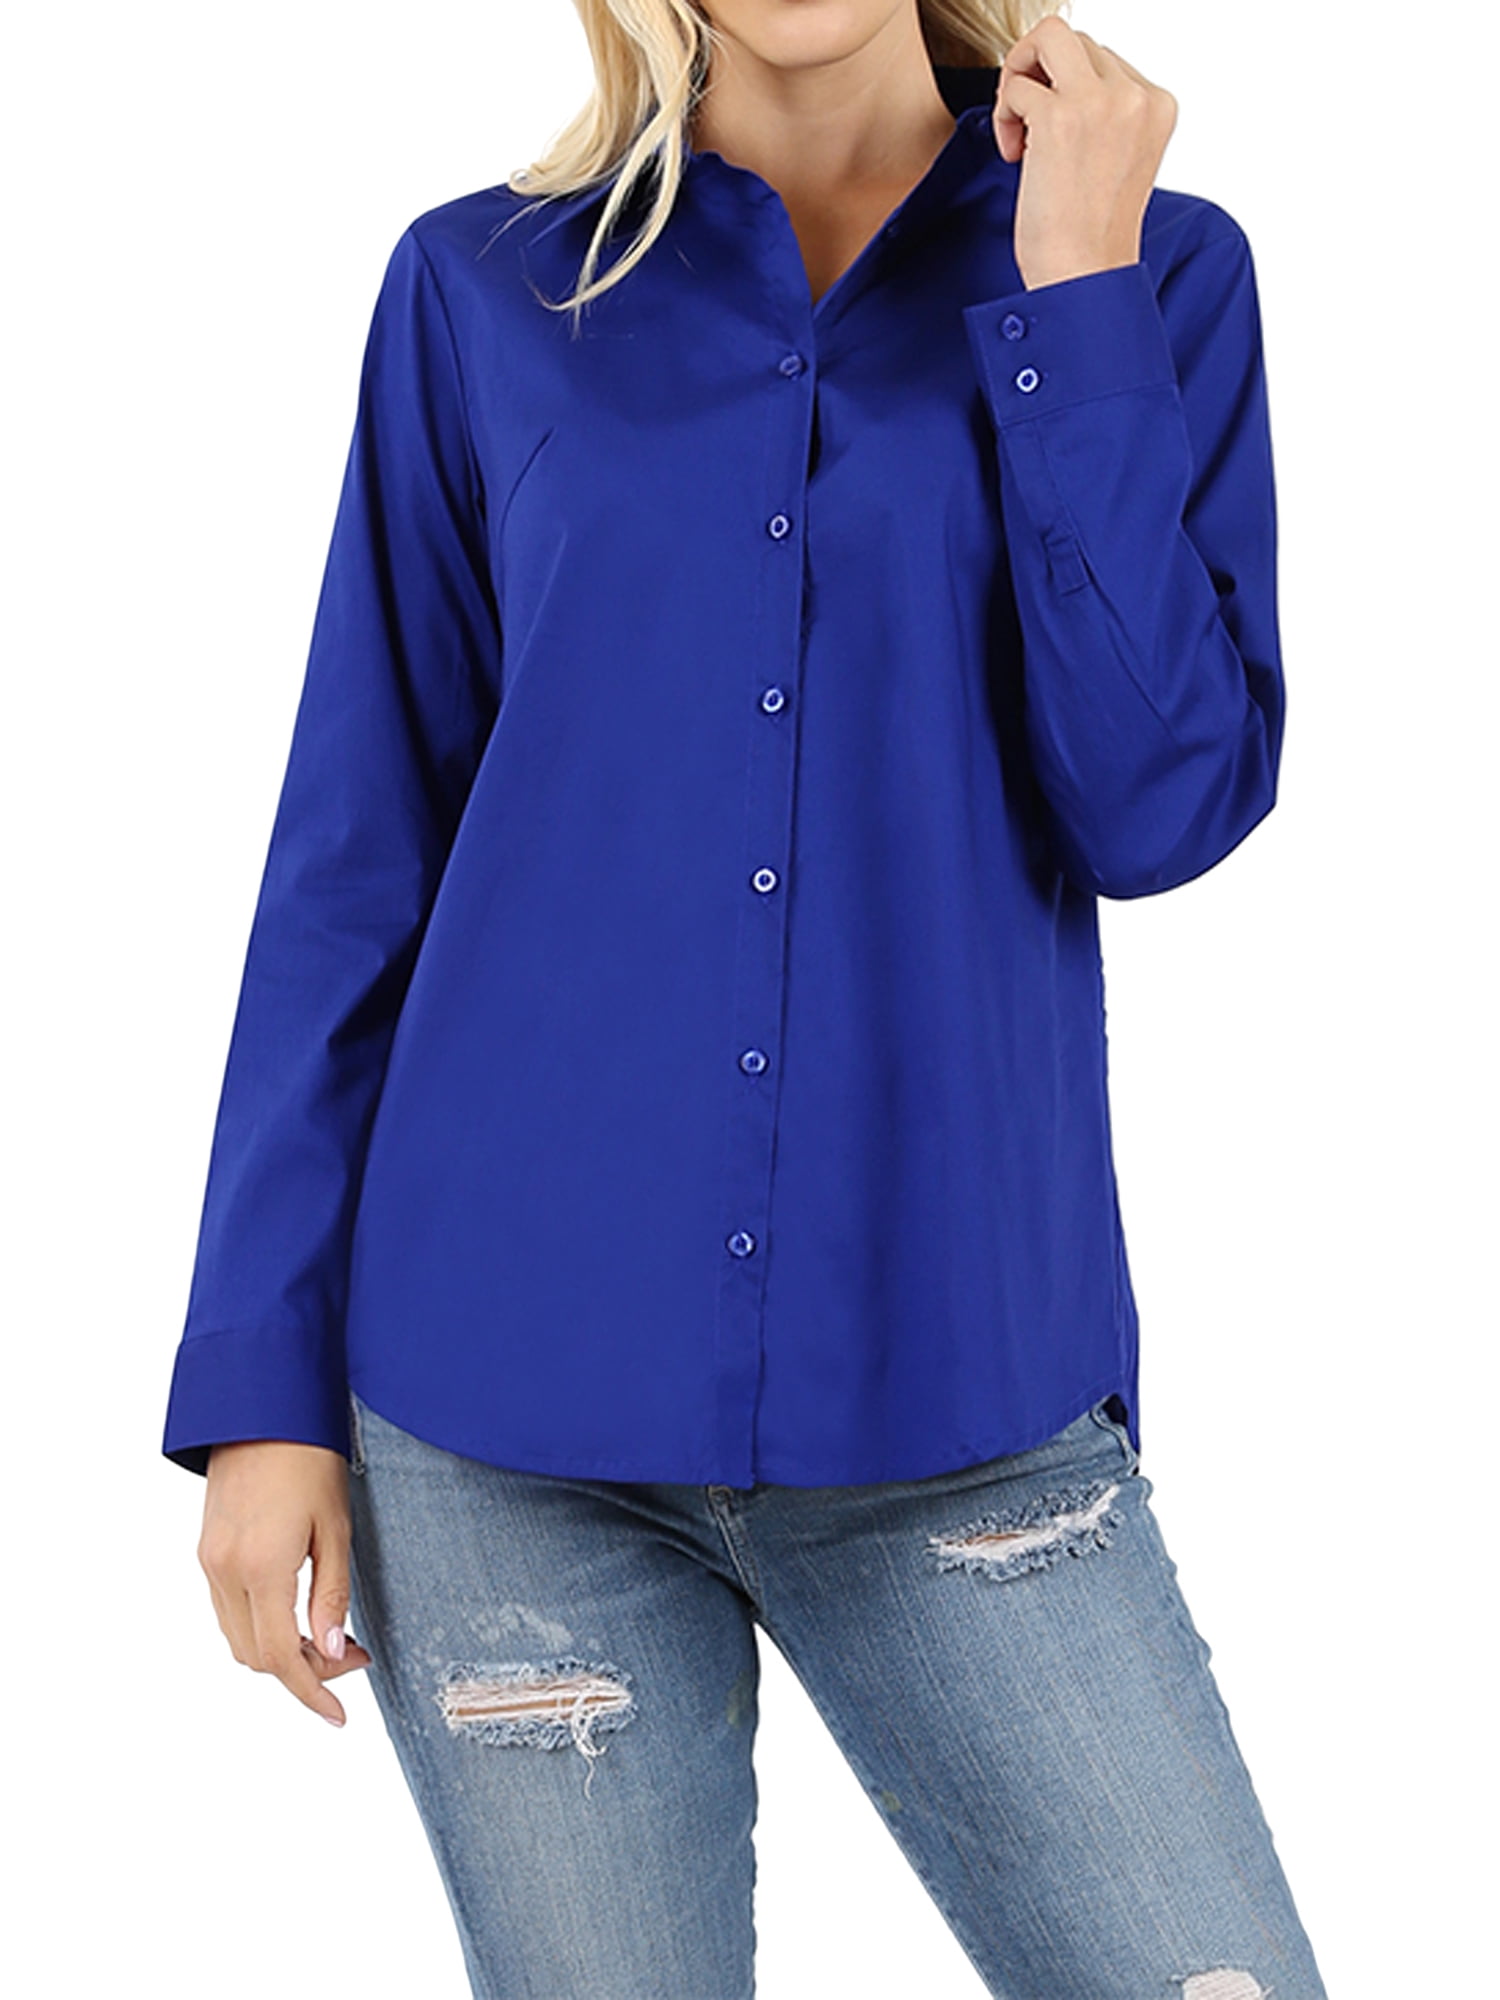 Women's Basic Long Sleeve Button Down Blouse Shirt (S-3XL Missy Fit ...